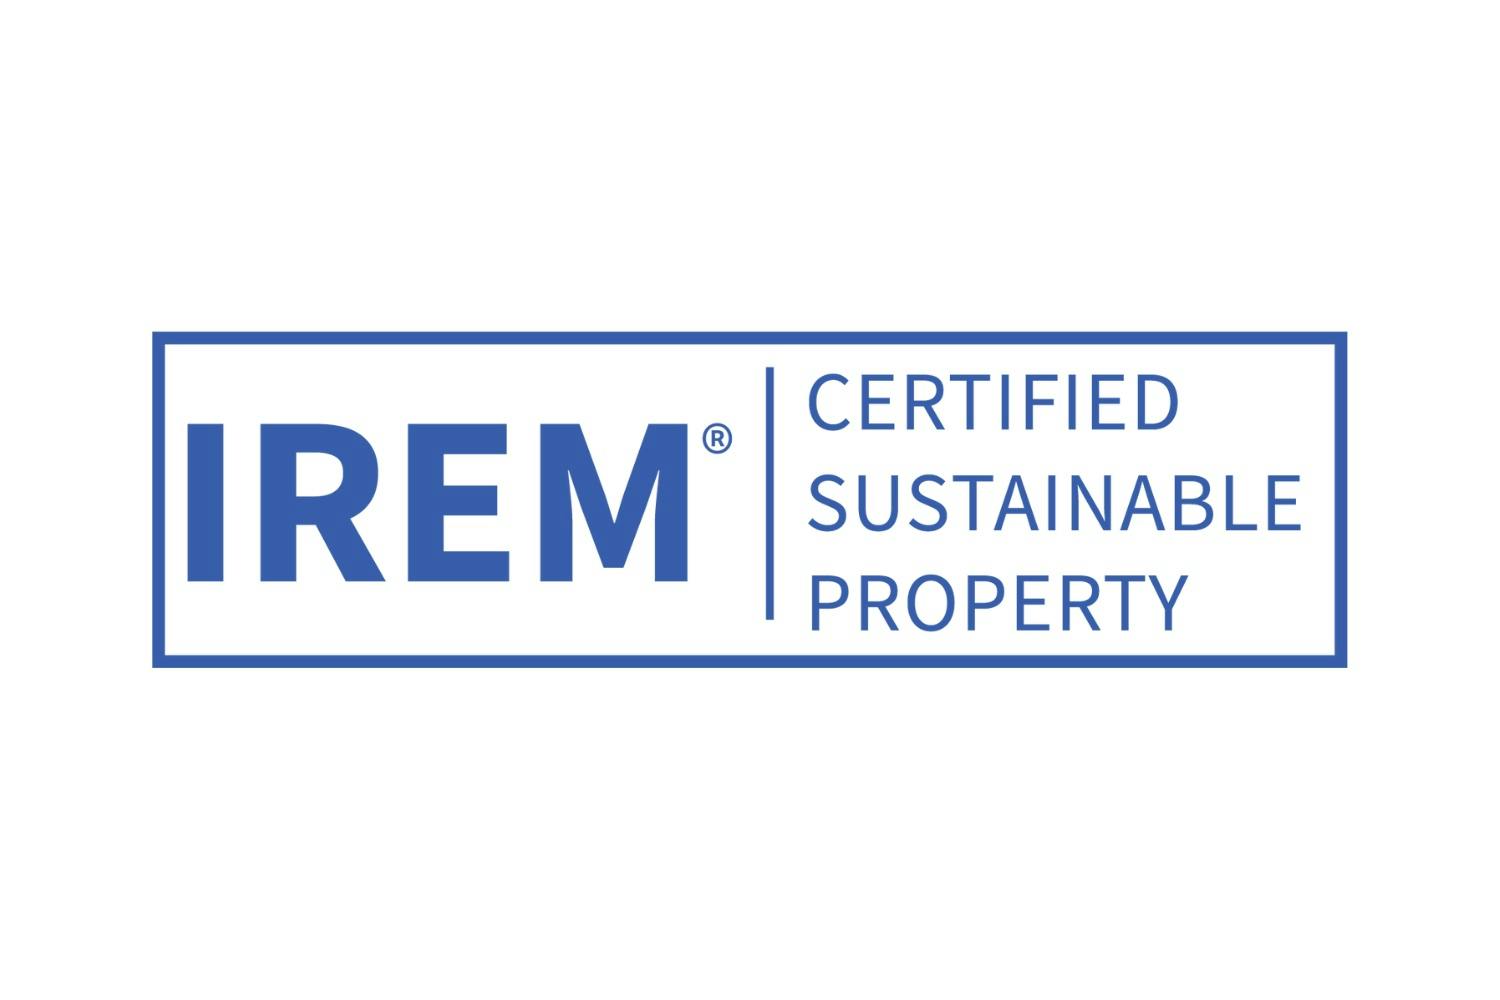 IREM_Certified.jpg